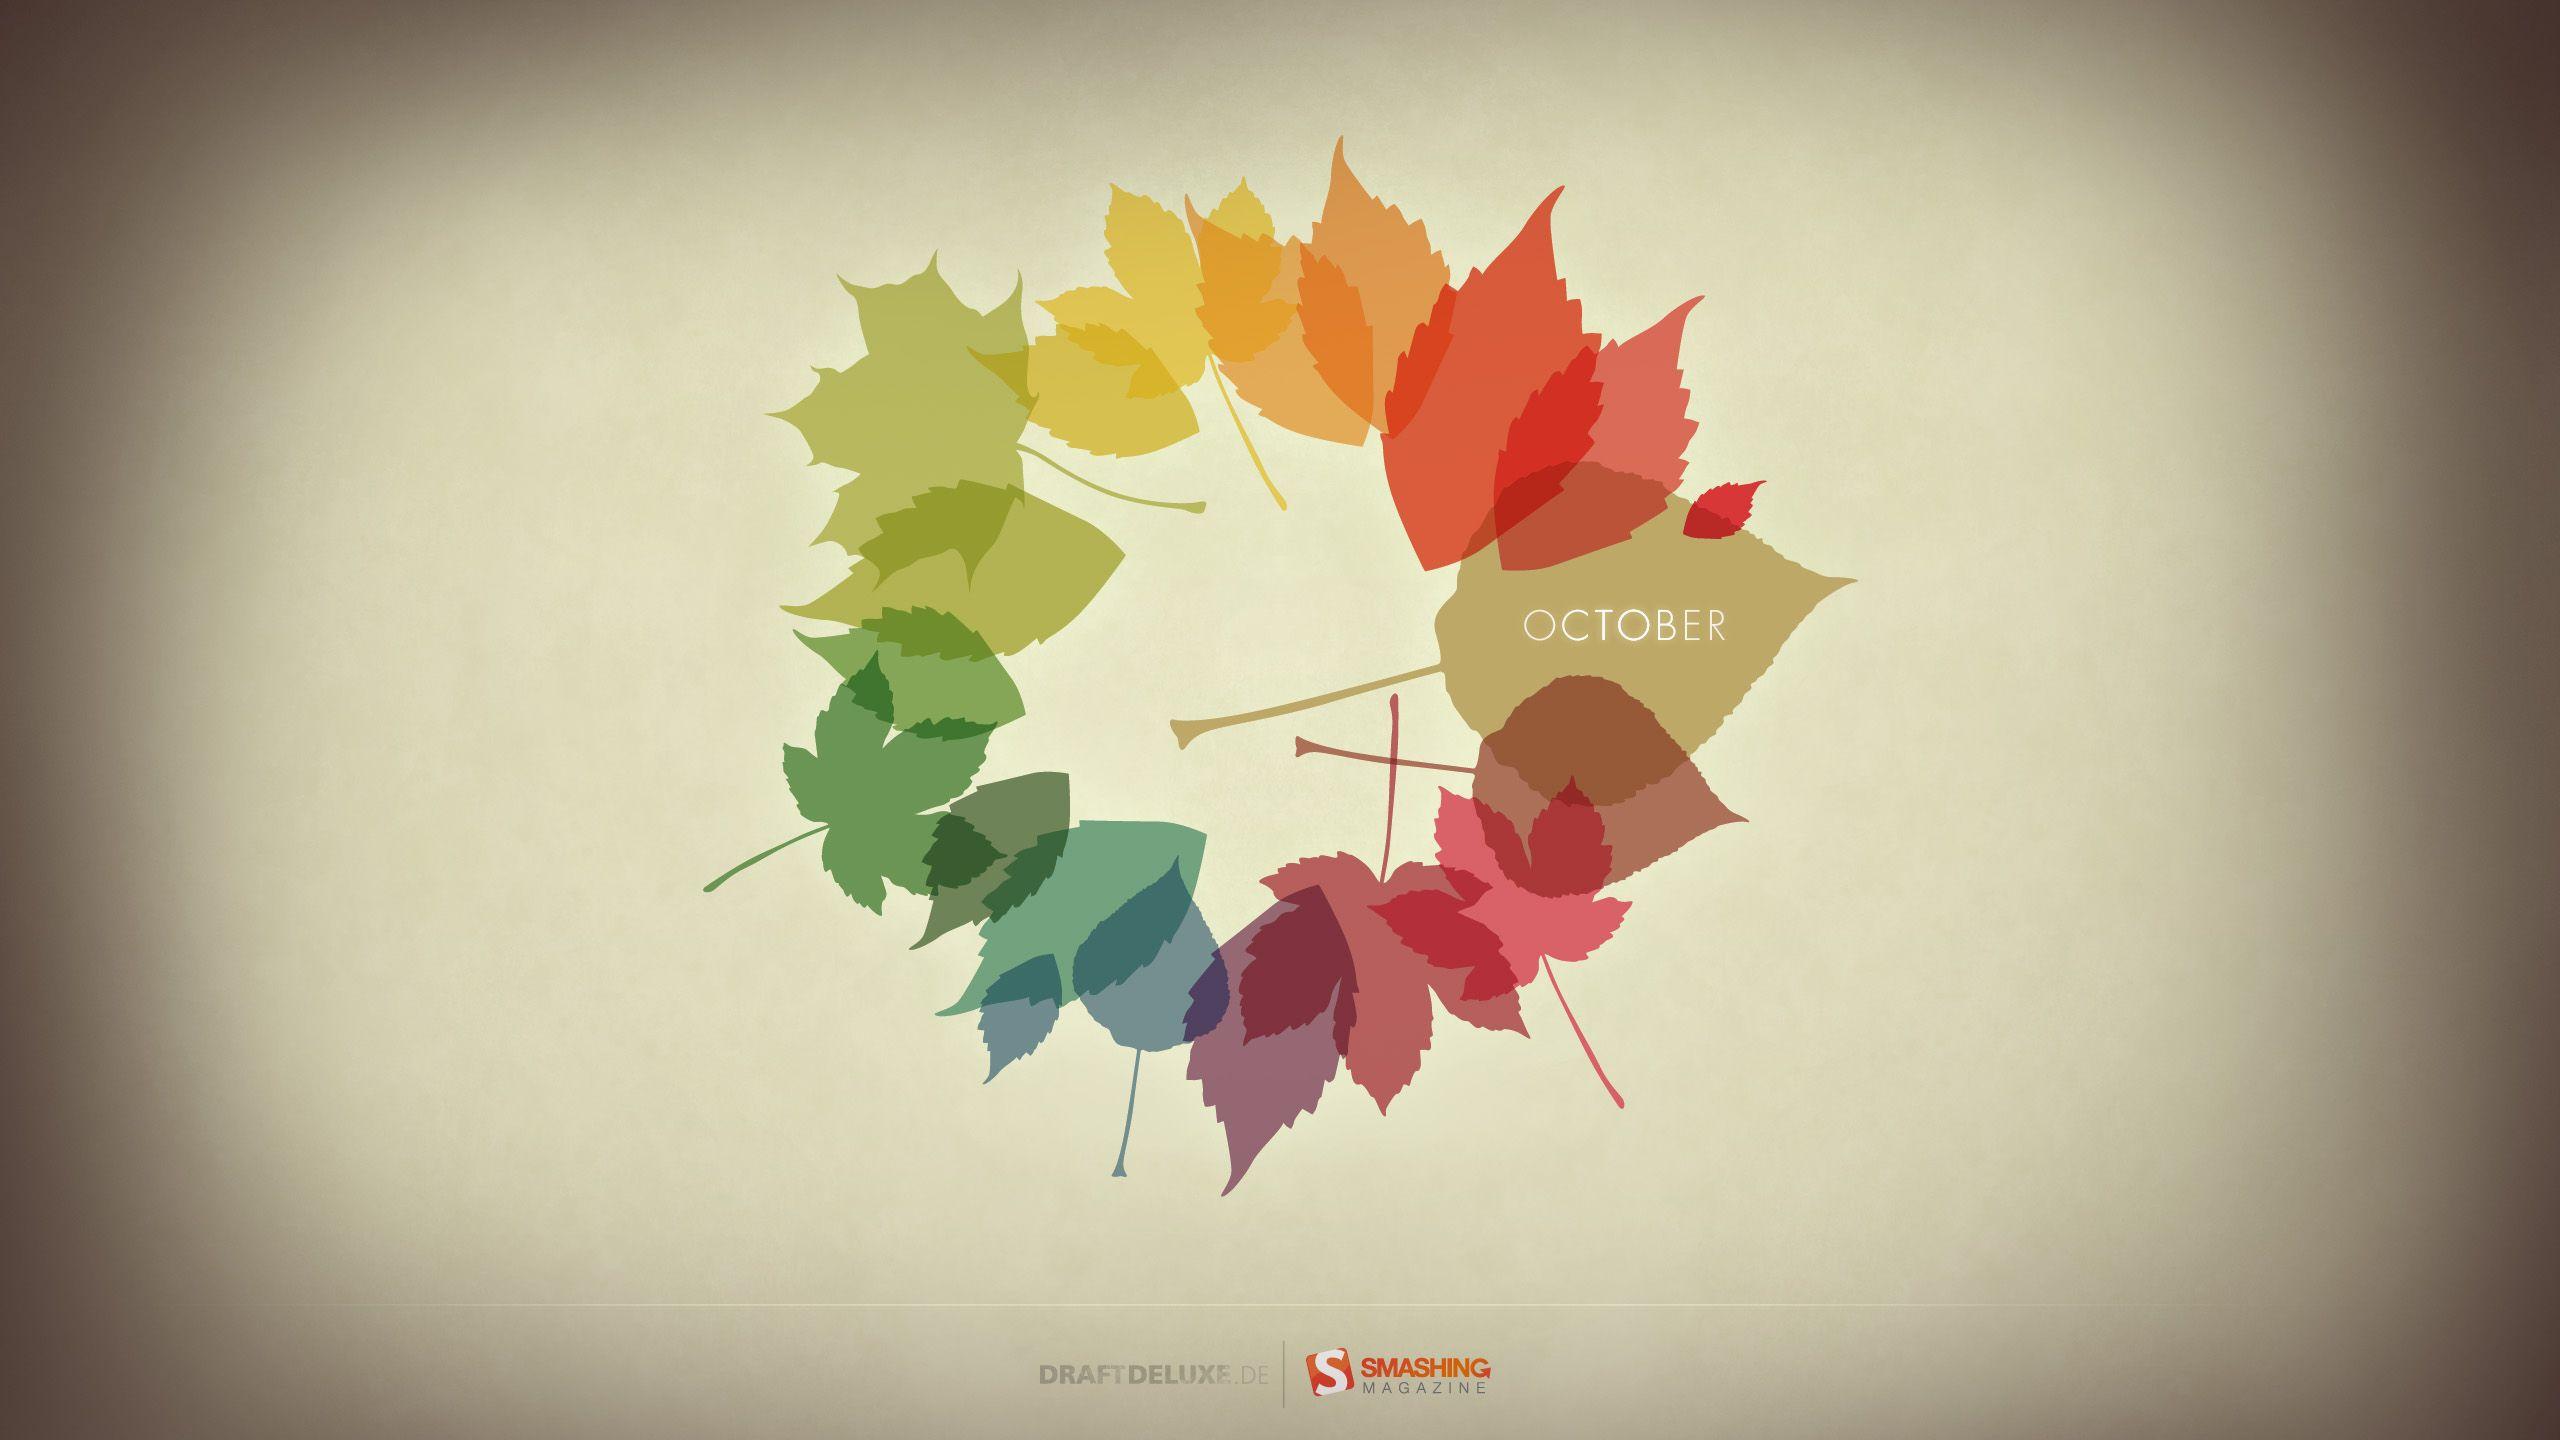 autumn, leaves, October, simple background, Smashing magazine, color